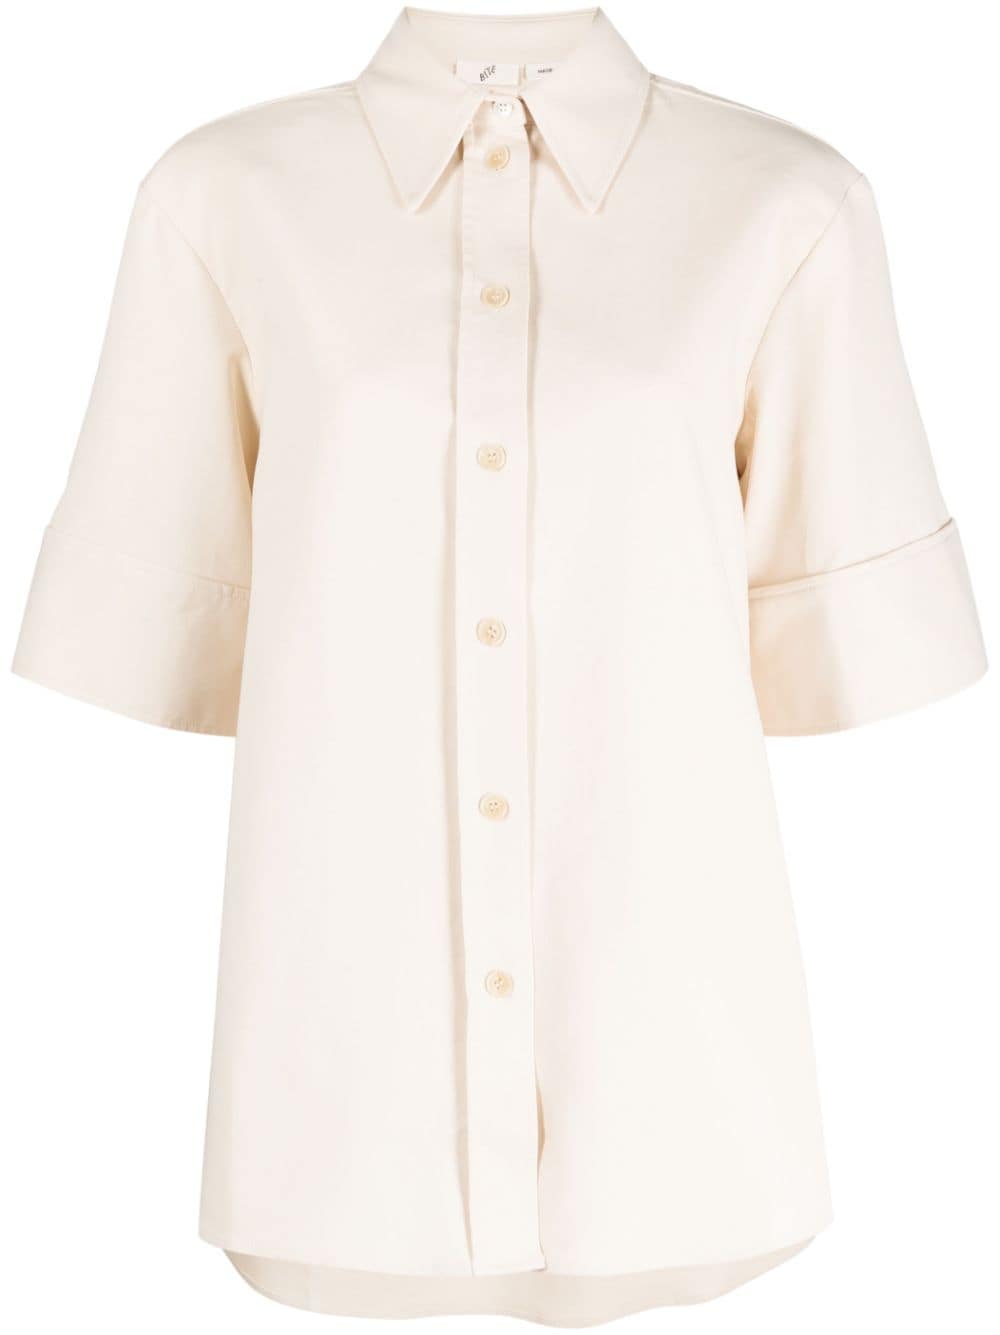 stretch-cotton short-sleeve shirt